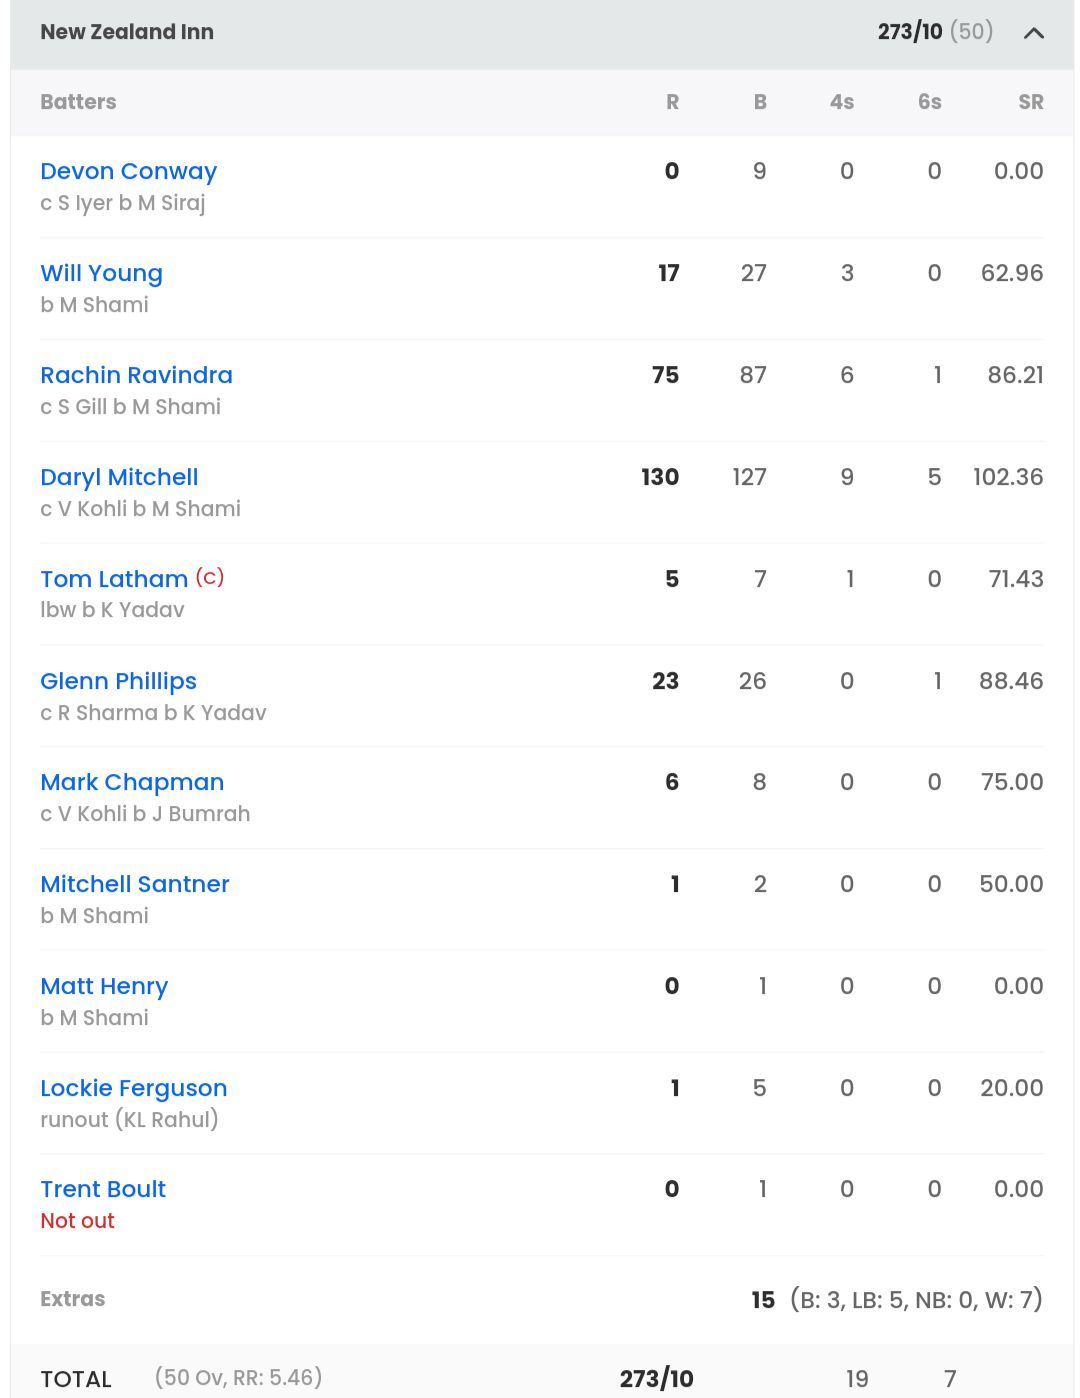 New Zealand batting scorecard vs India [Sportskeeda]